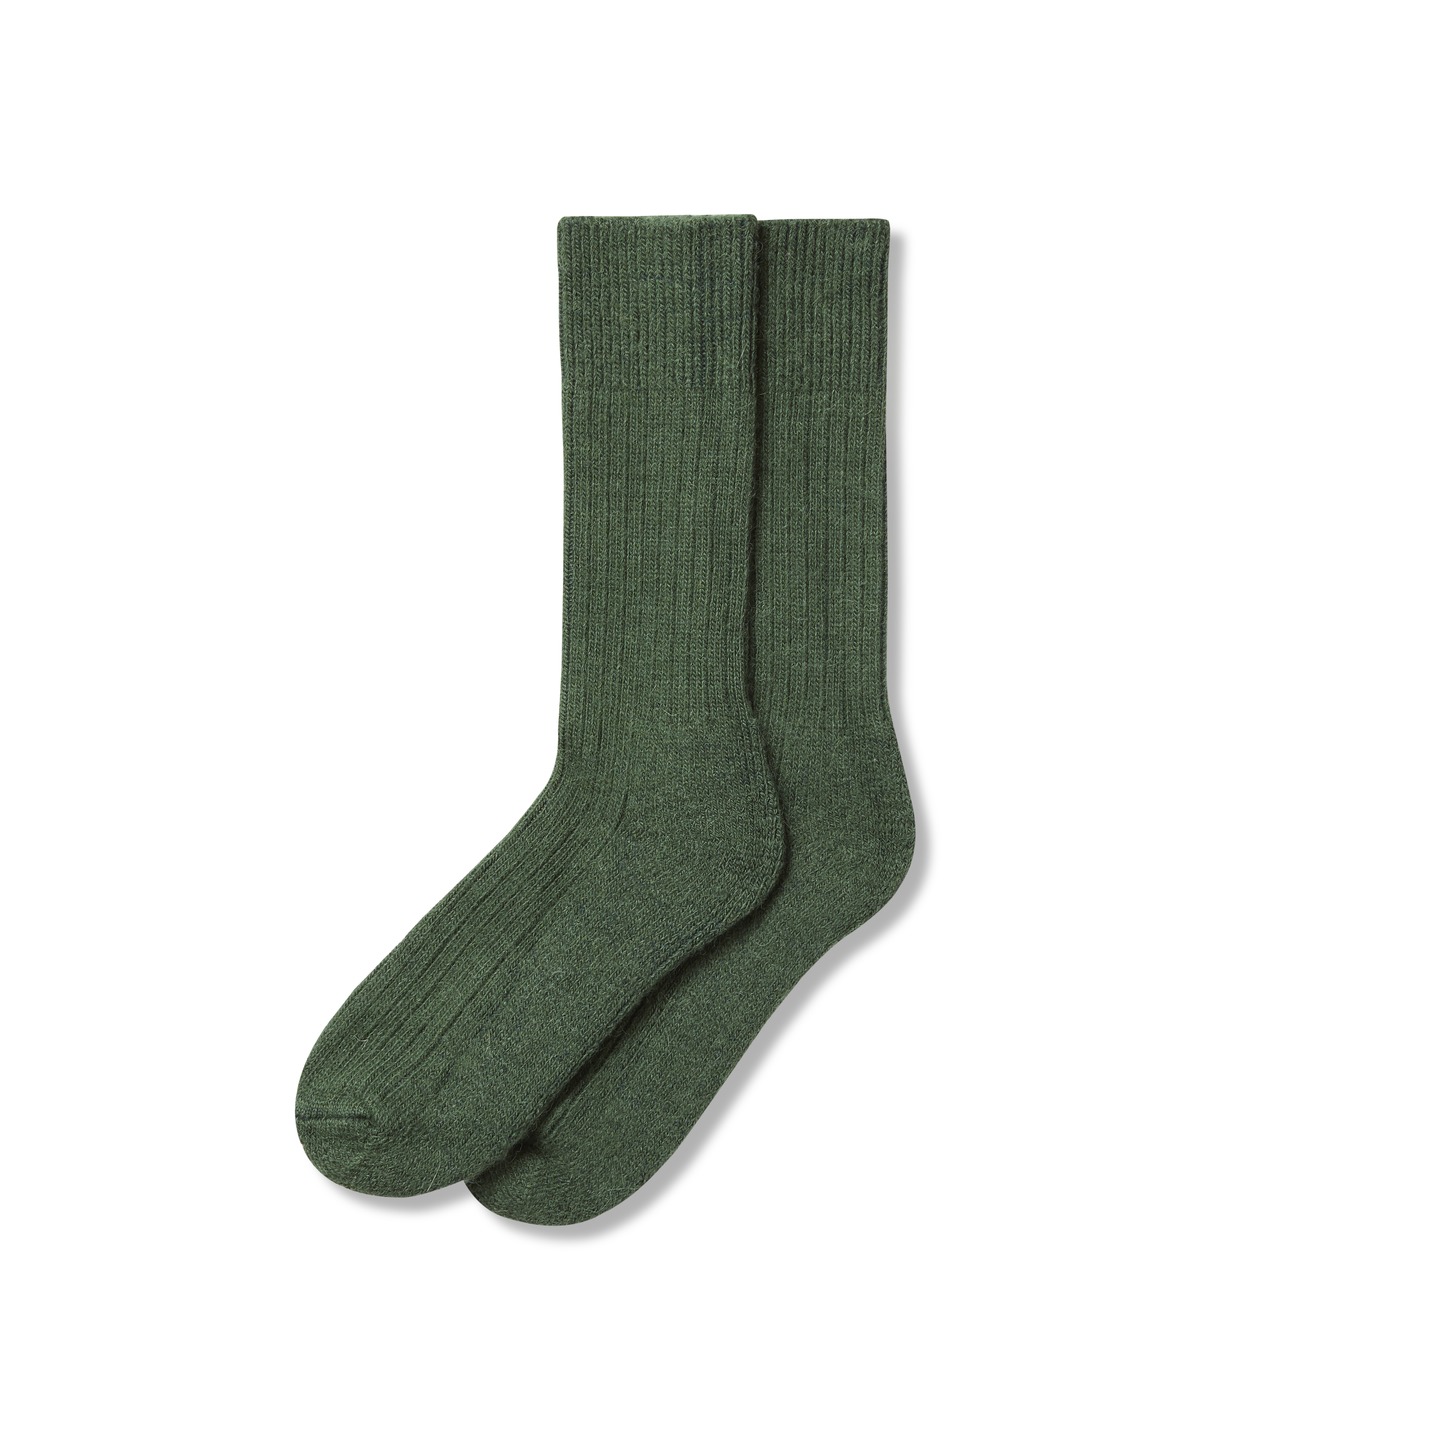 The Murray | The Cambridge Sock Company